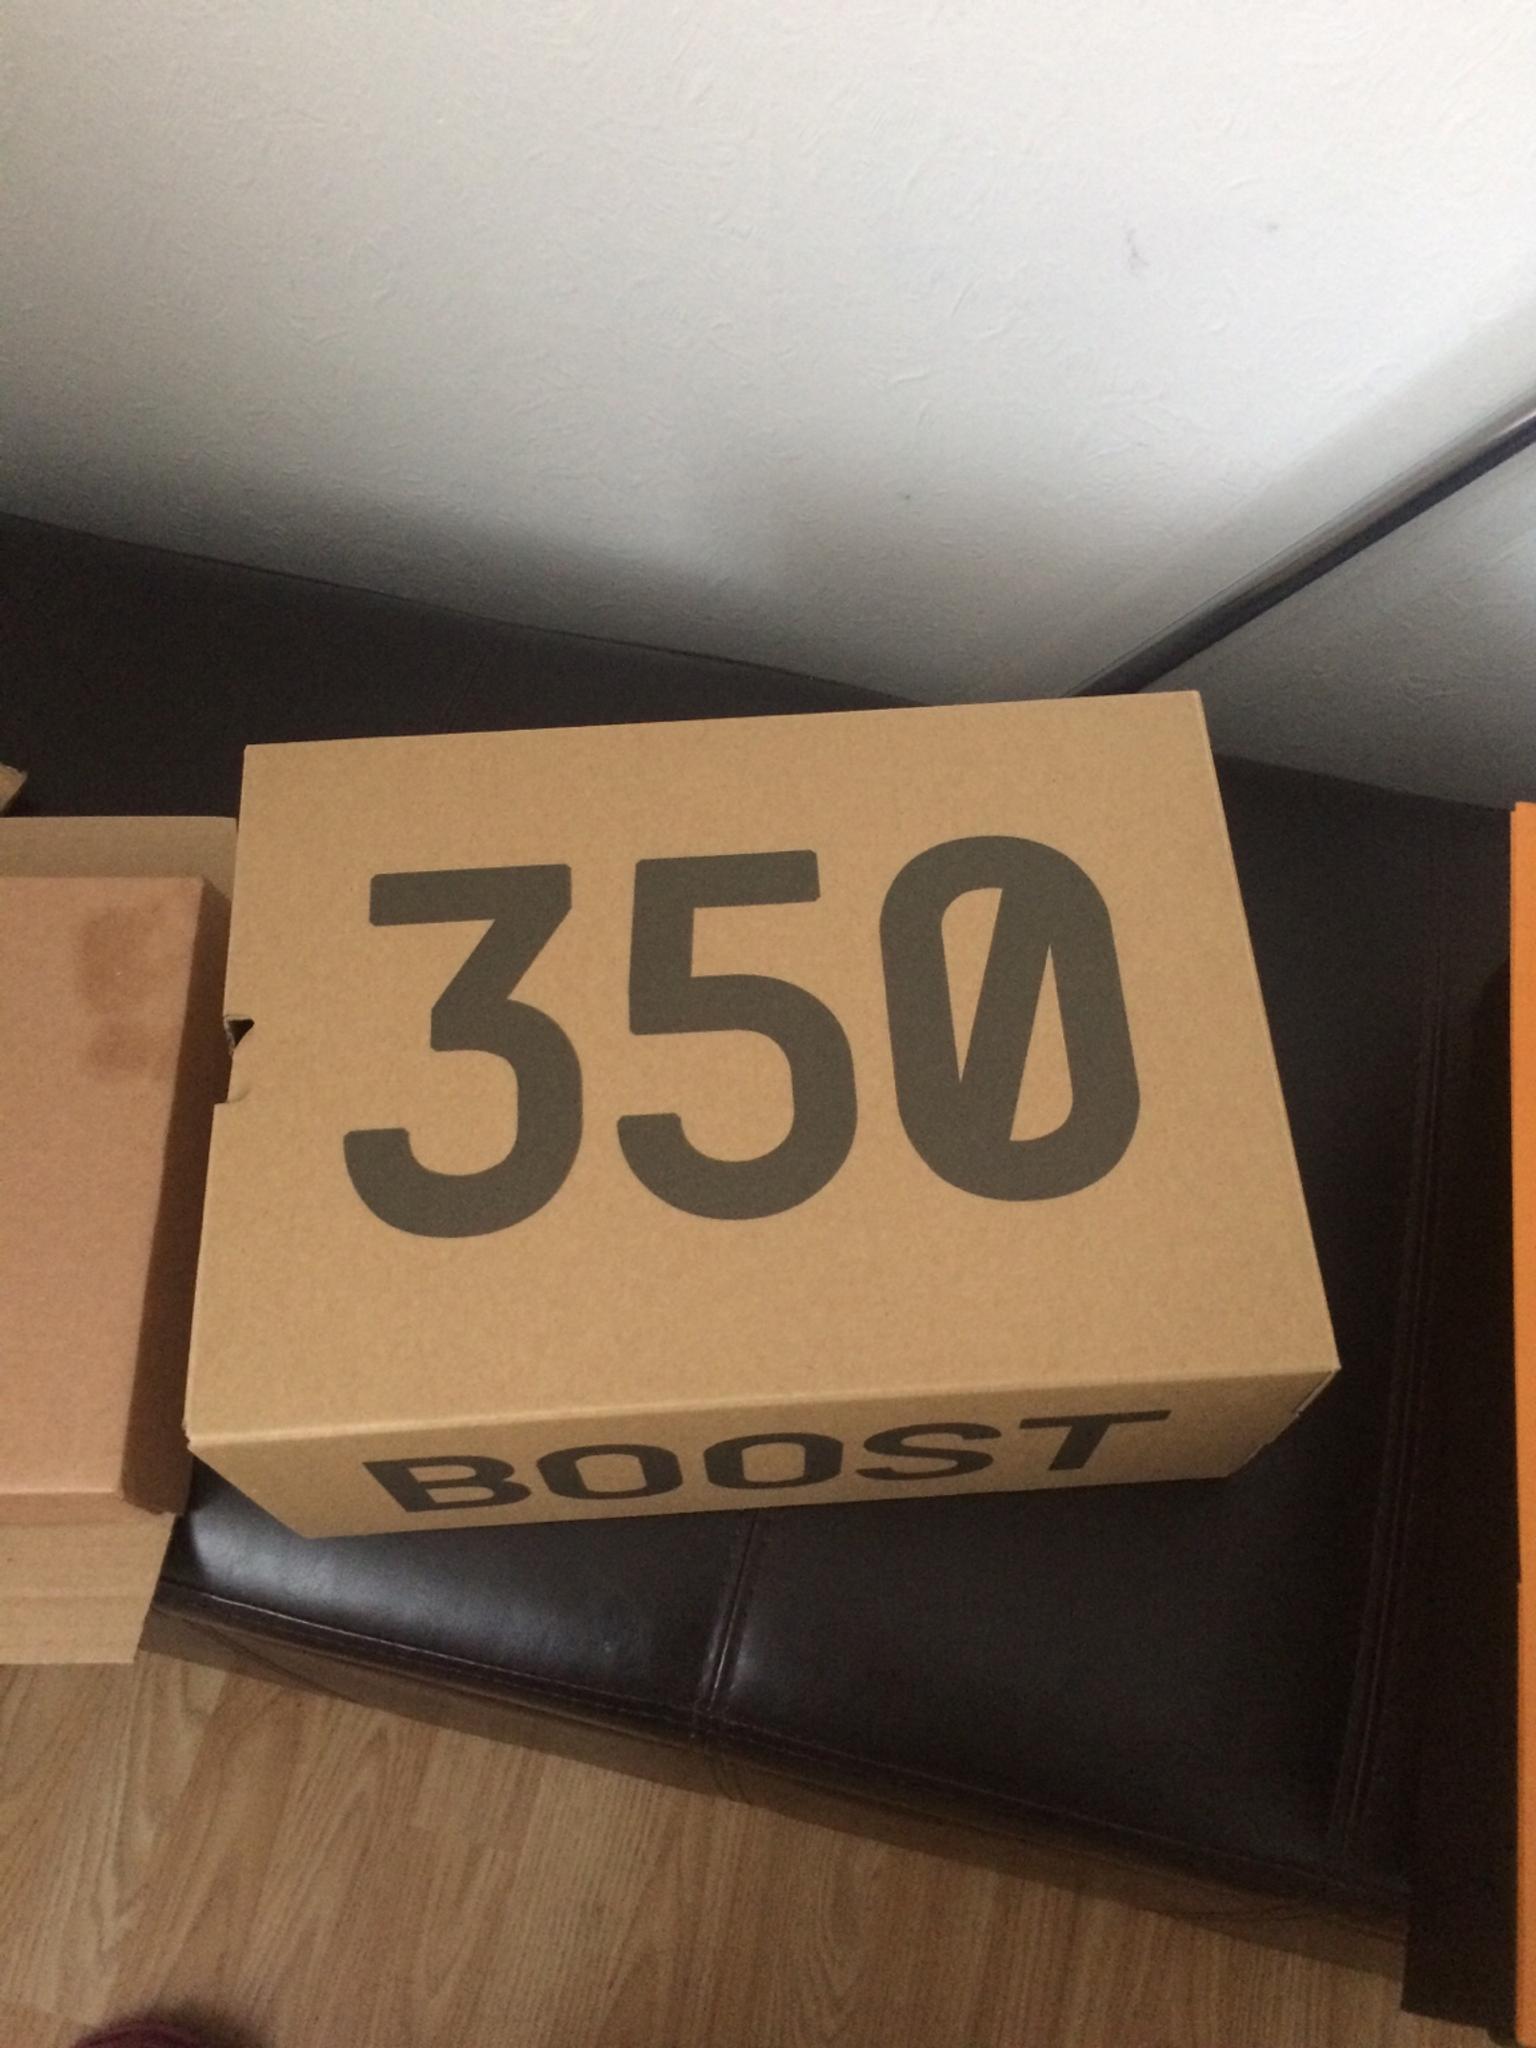 yeezy boost 350 shoe box